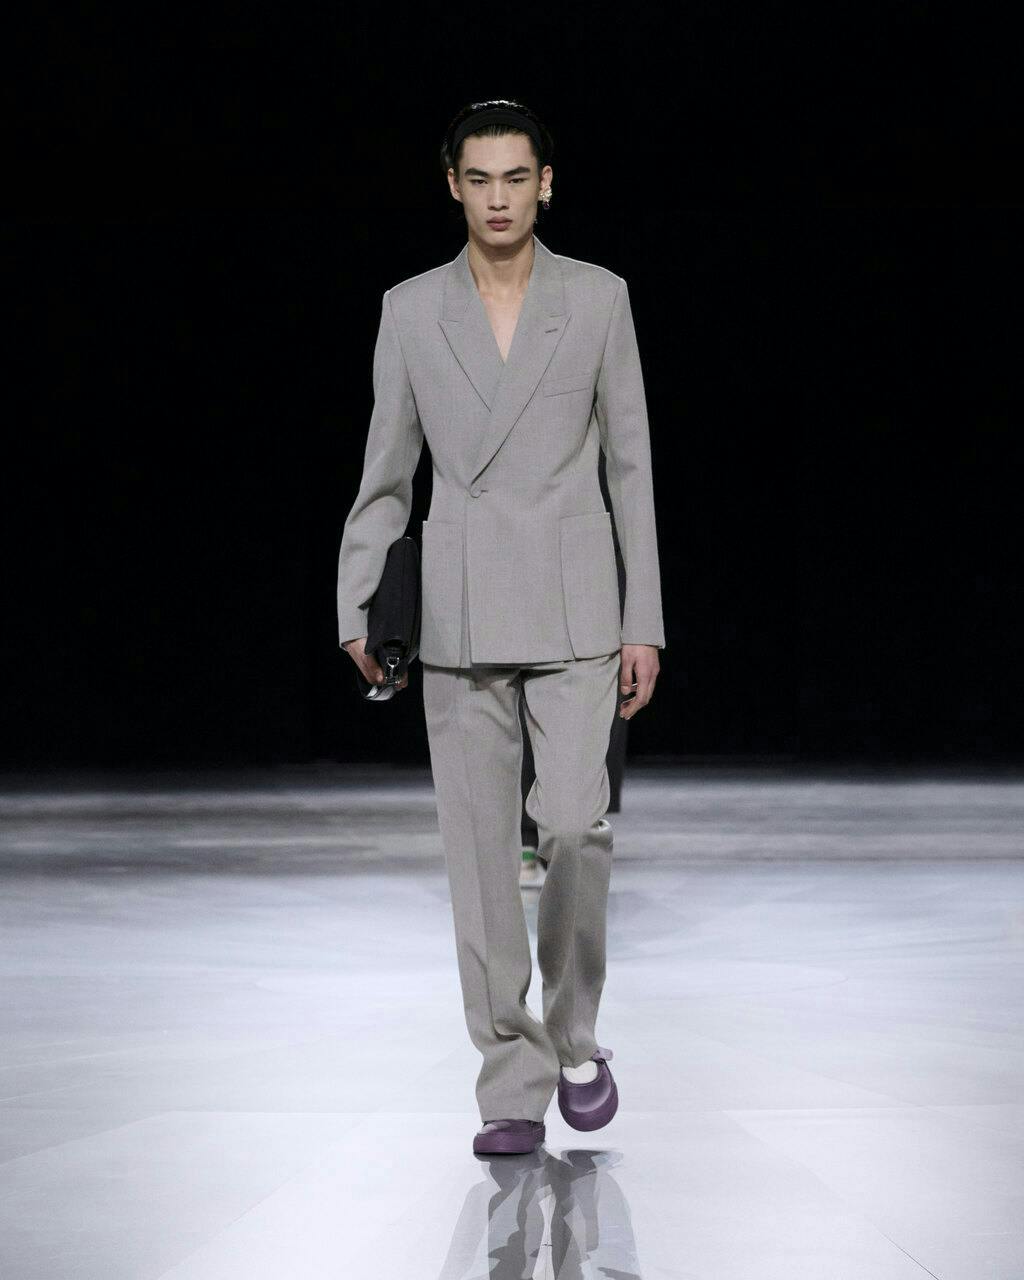 formal wear suit fashion person standing coat adult male man shoe